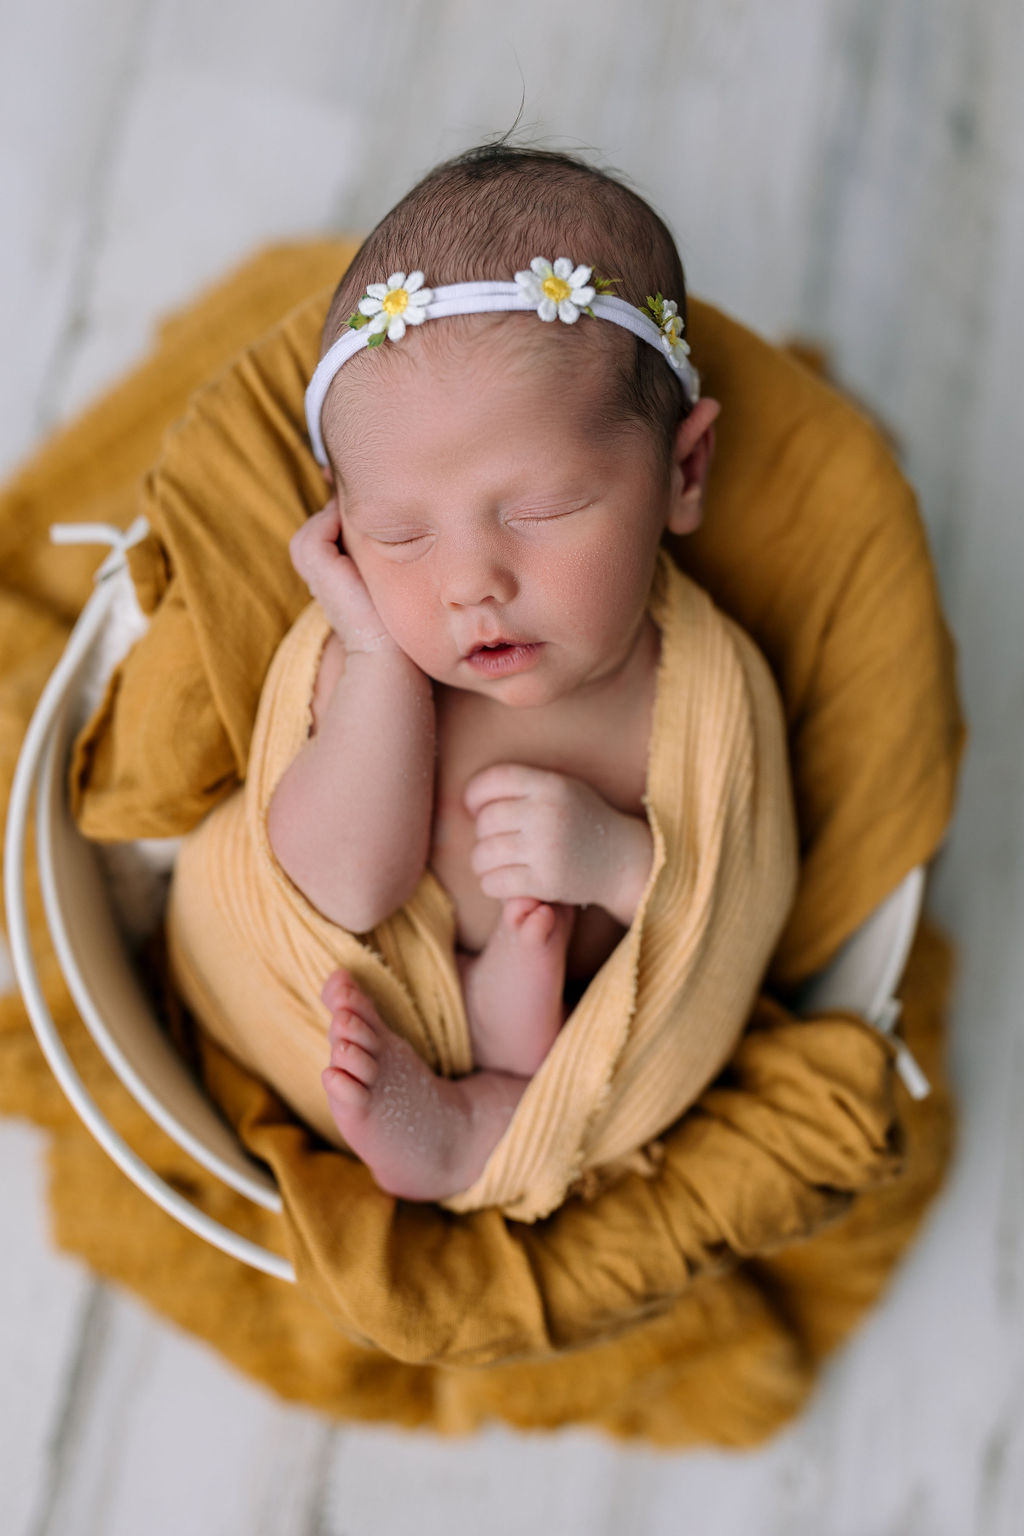 A newborn baby sleeps in a bucket while wearing a daisy headband